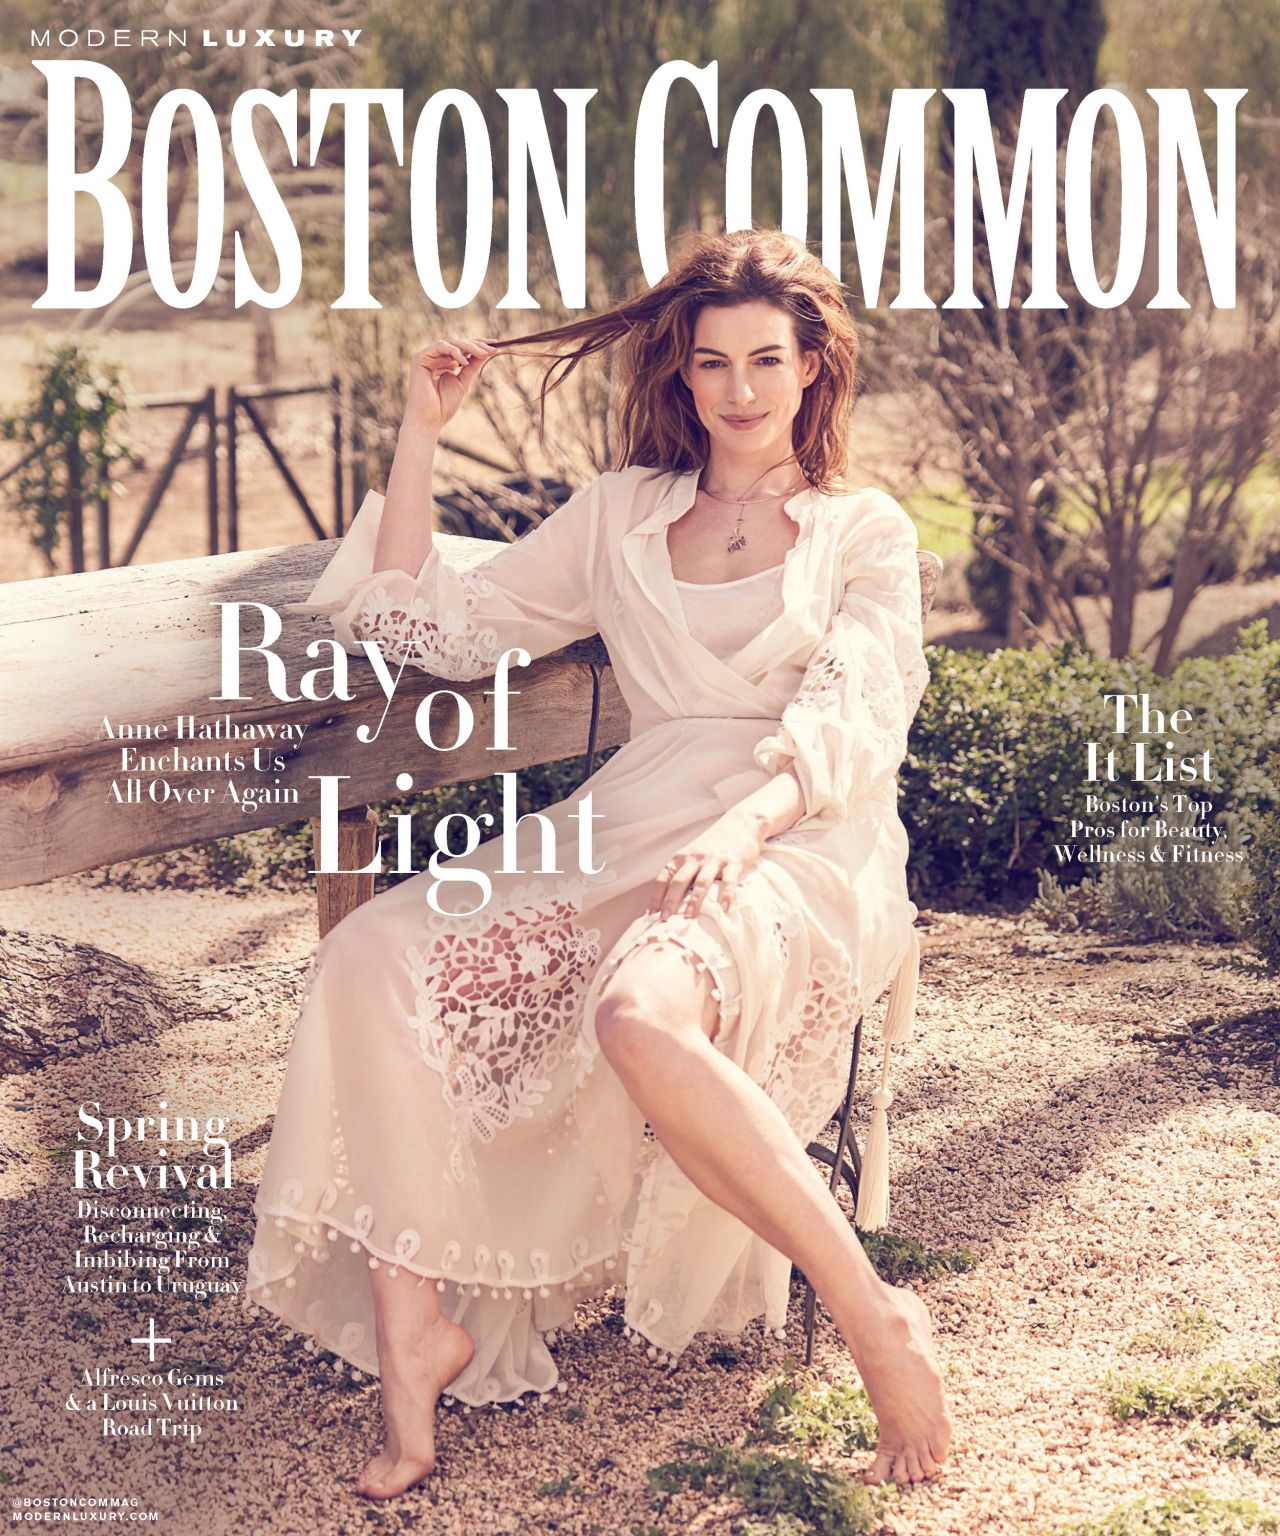 https://celebmafia.com/wp-content/uploads/2019/05/anne-hathaway-boston-common-magazine-may-2019-issue-0.jpg